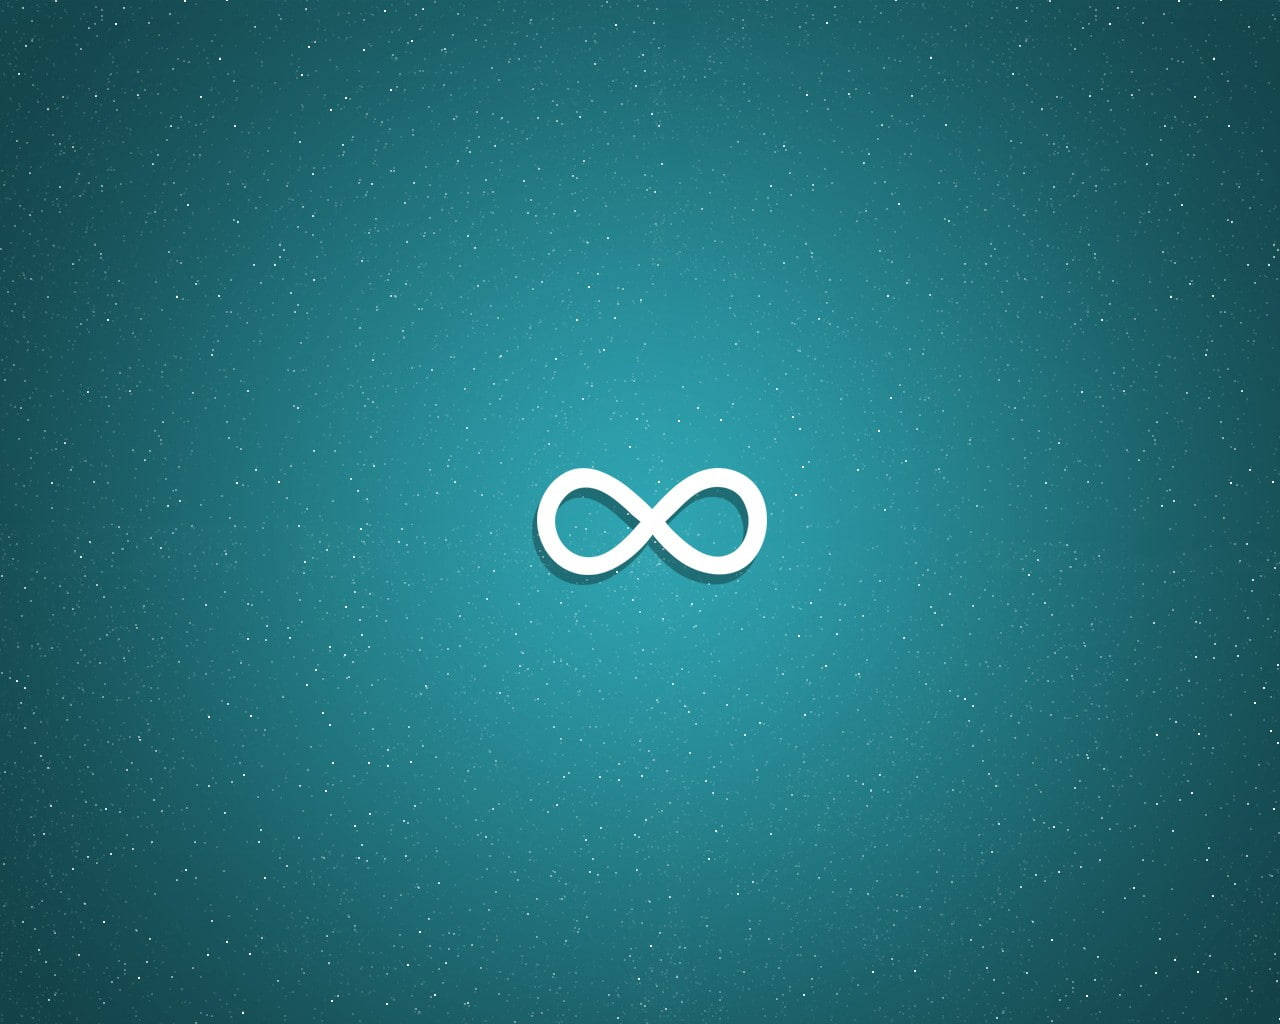 Free Infinity Symbol Wallpaper Downloads, [100+] Infinity Symbol Wallpapers  for FREE 